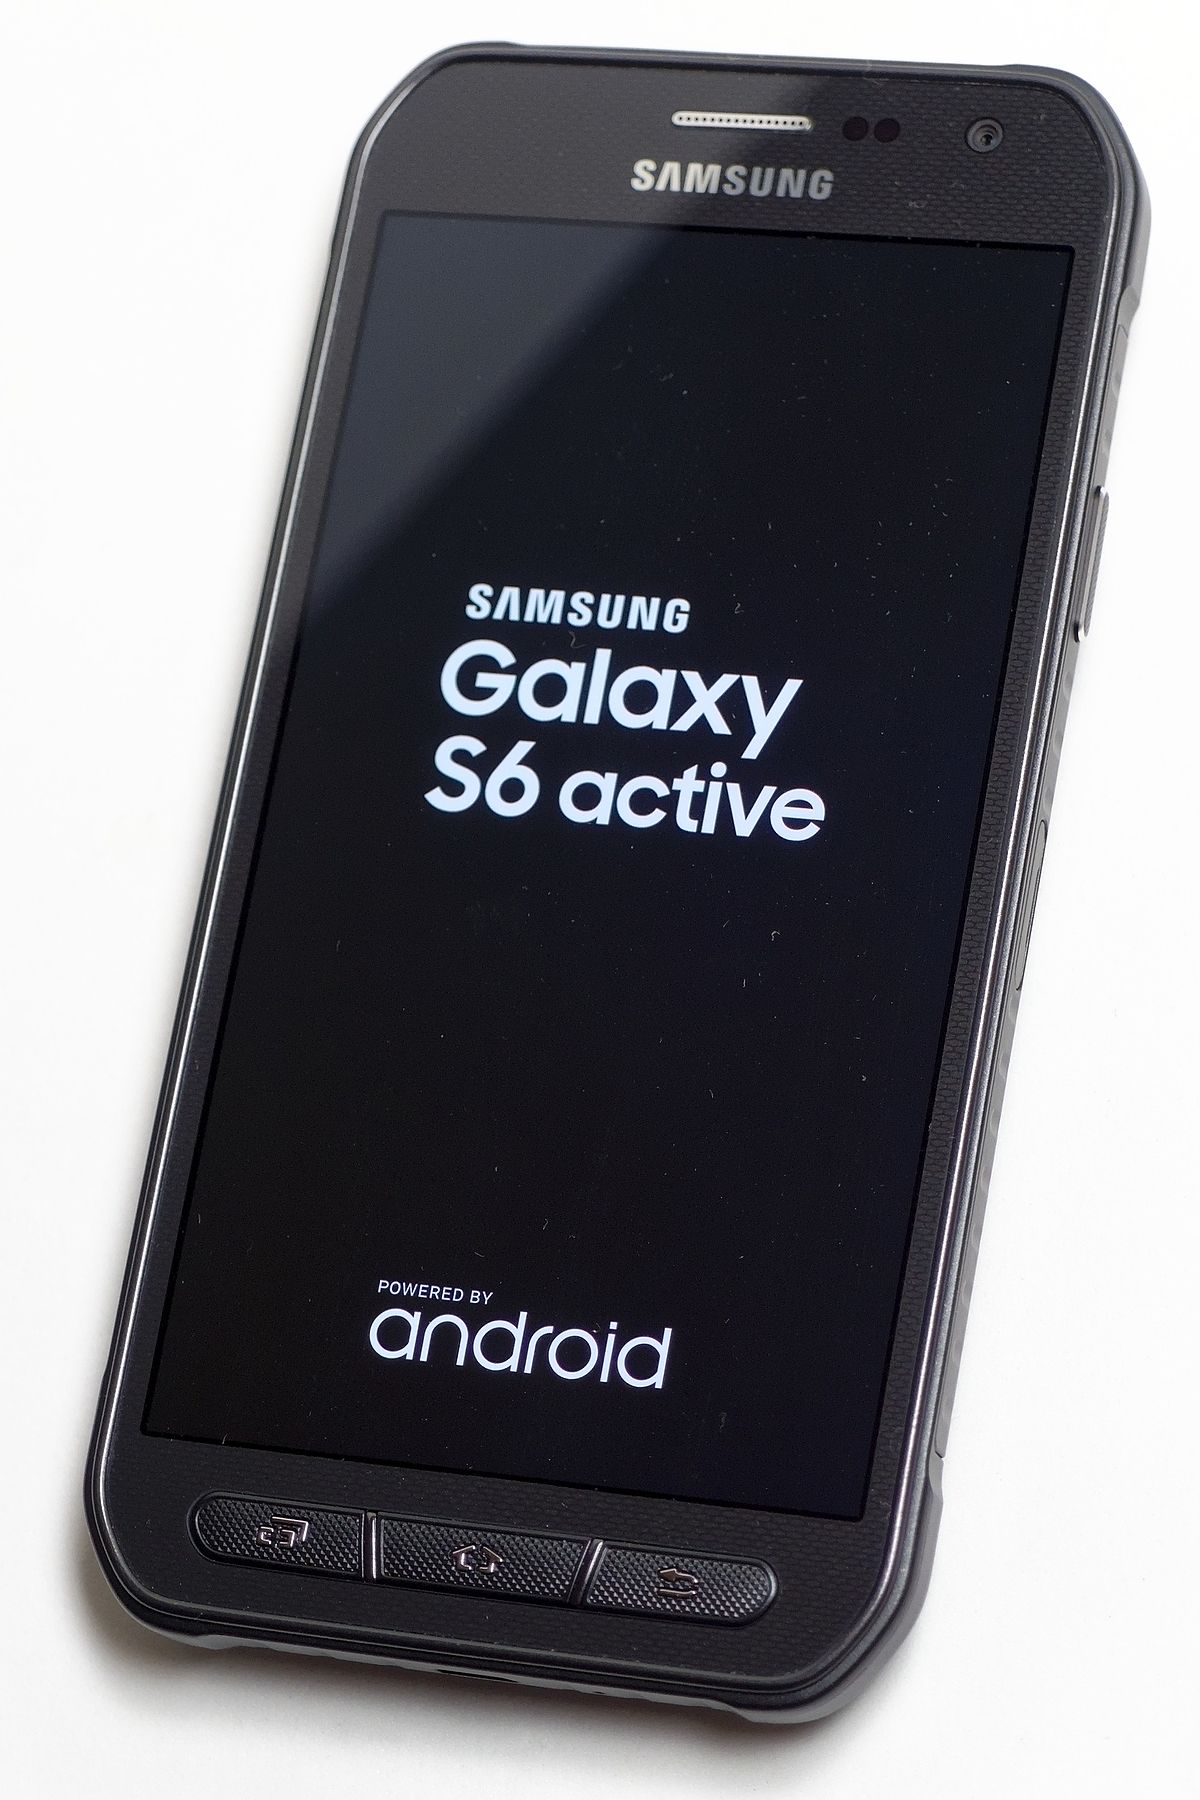 Samsung Galaxy S6 Active - Wikipedia